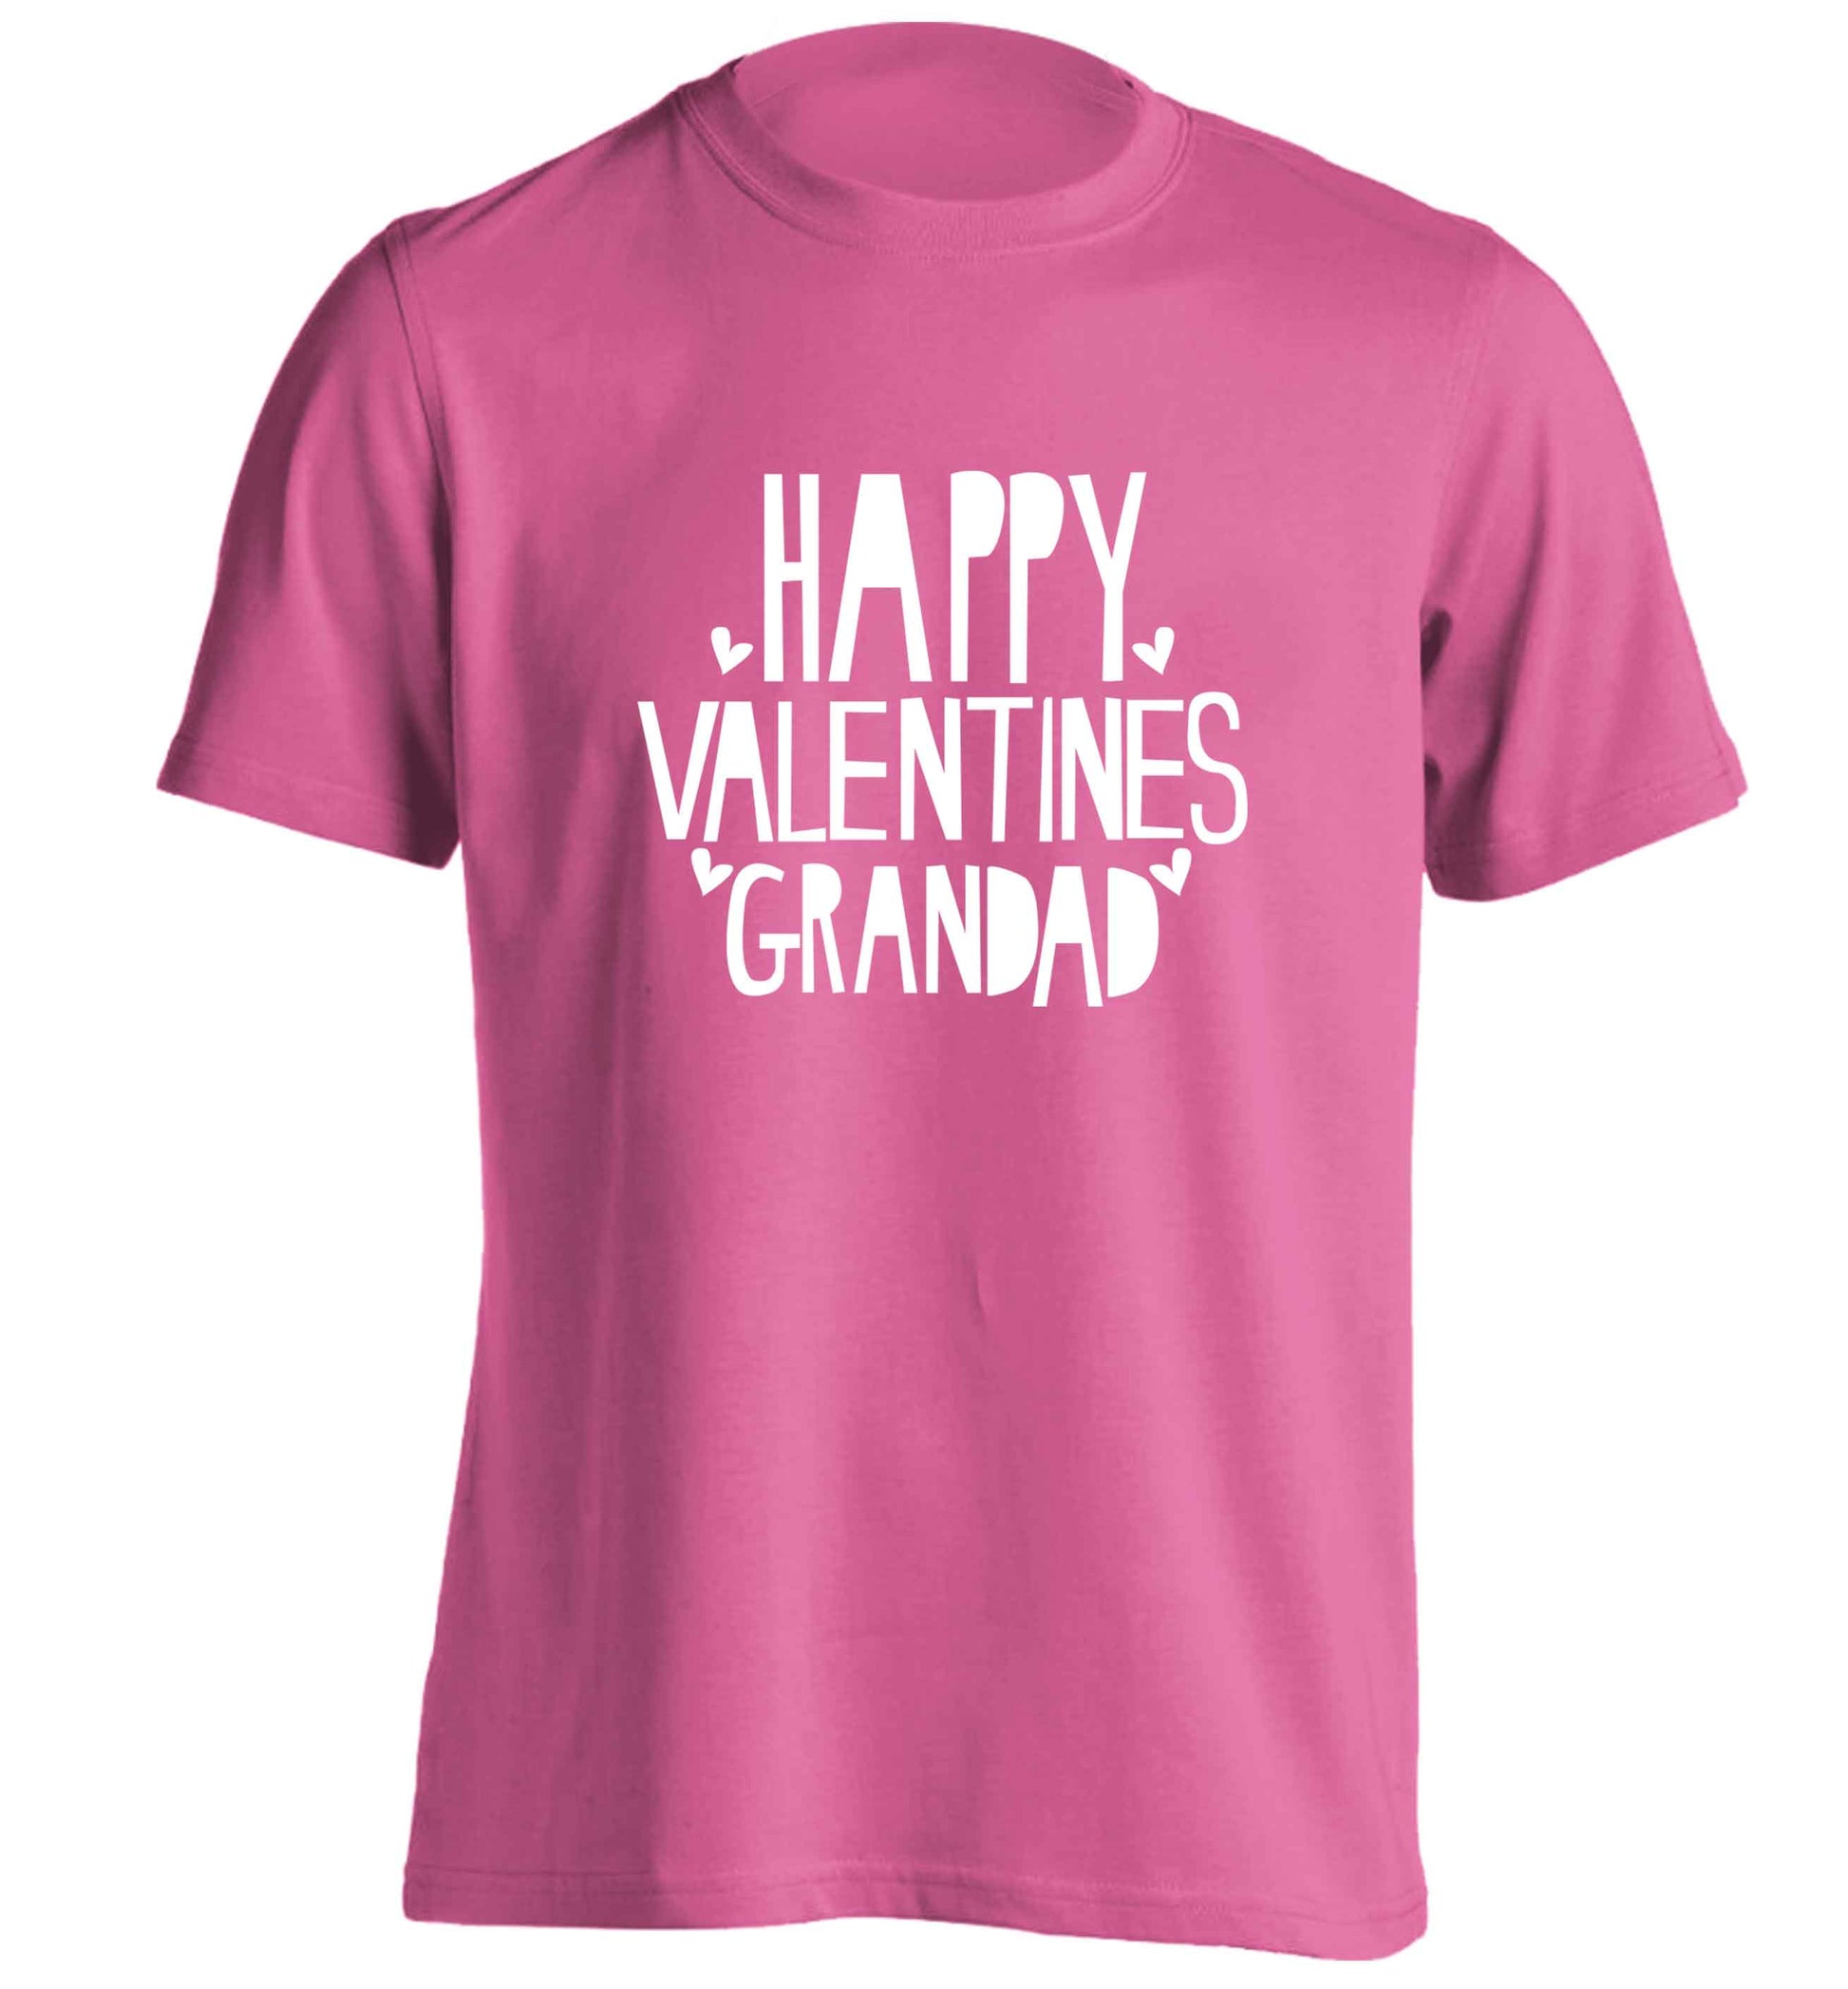 Happy valentines grandad adults unisex pink Tshirt 2XL